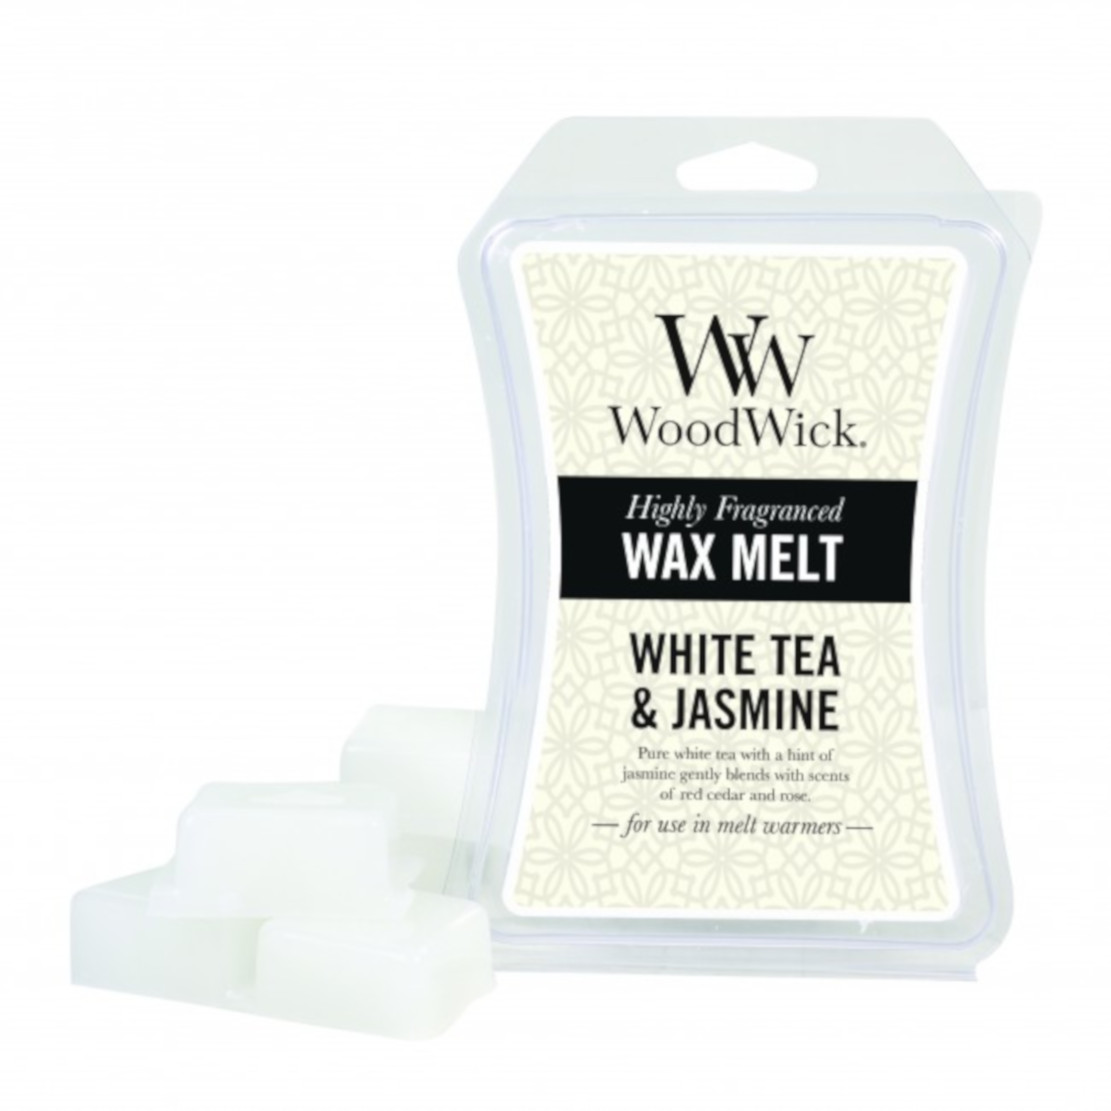 Woodwick White Tea & Jasmine Wax Melt